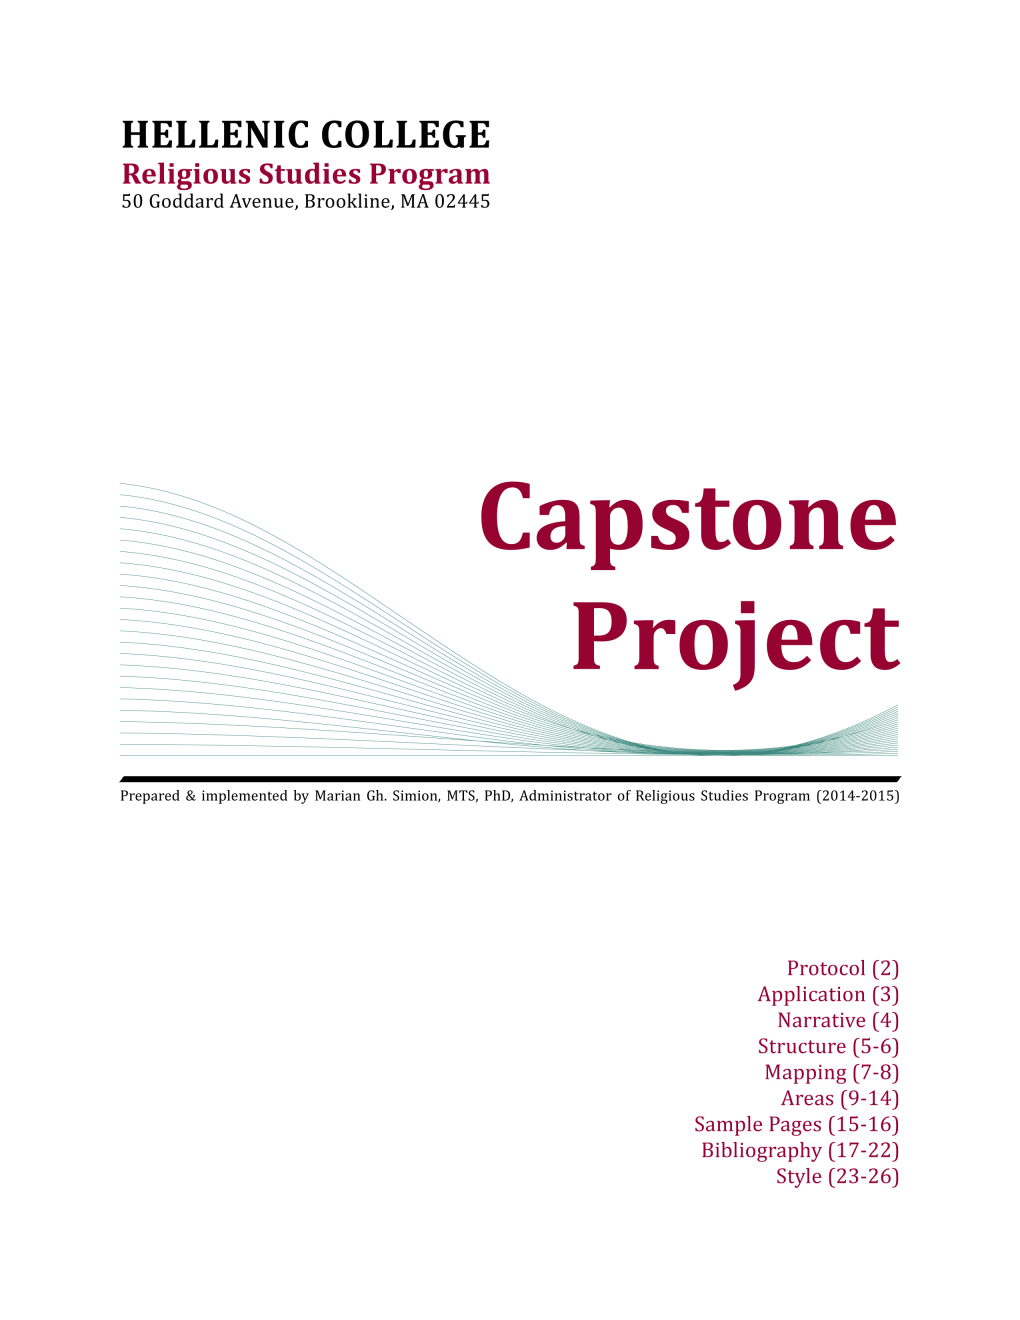 Capstone Project PROTOCOL